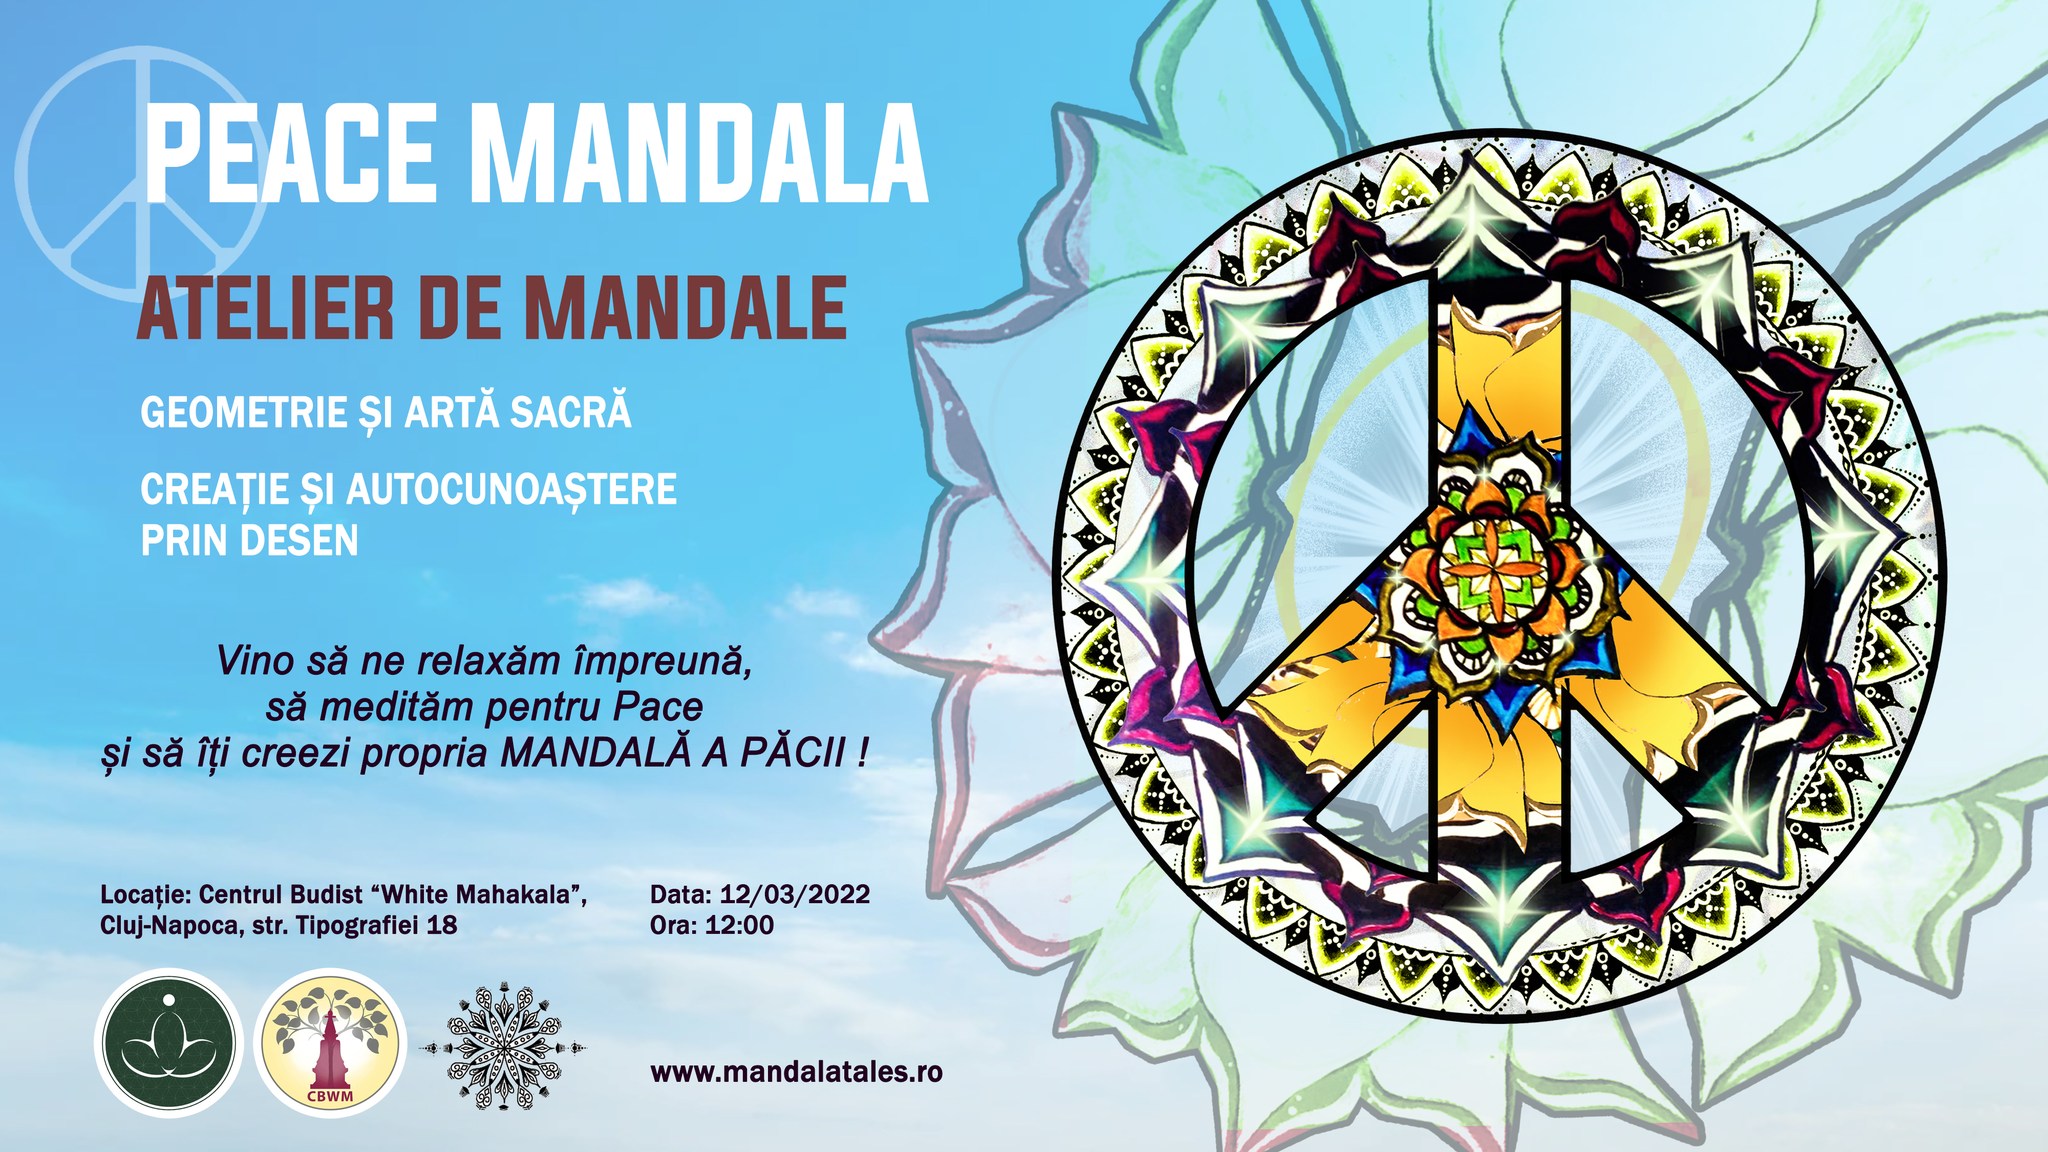 Atelier de Mandale ”PEACE Mandala”